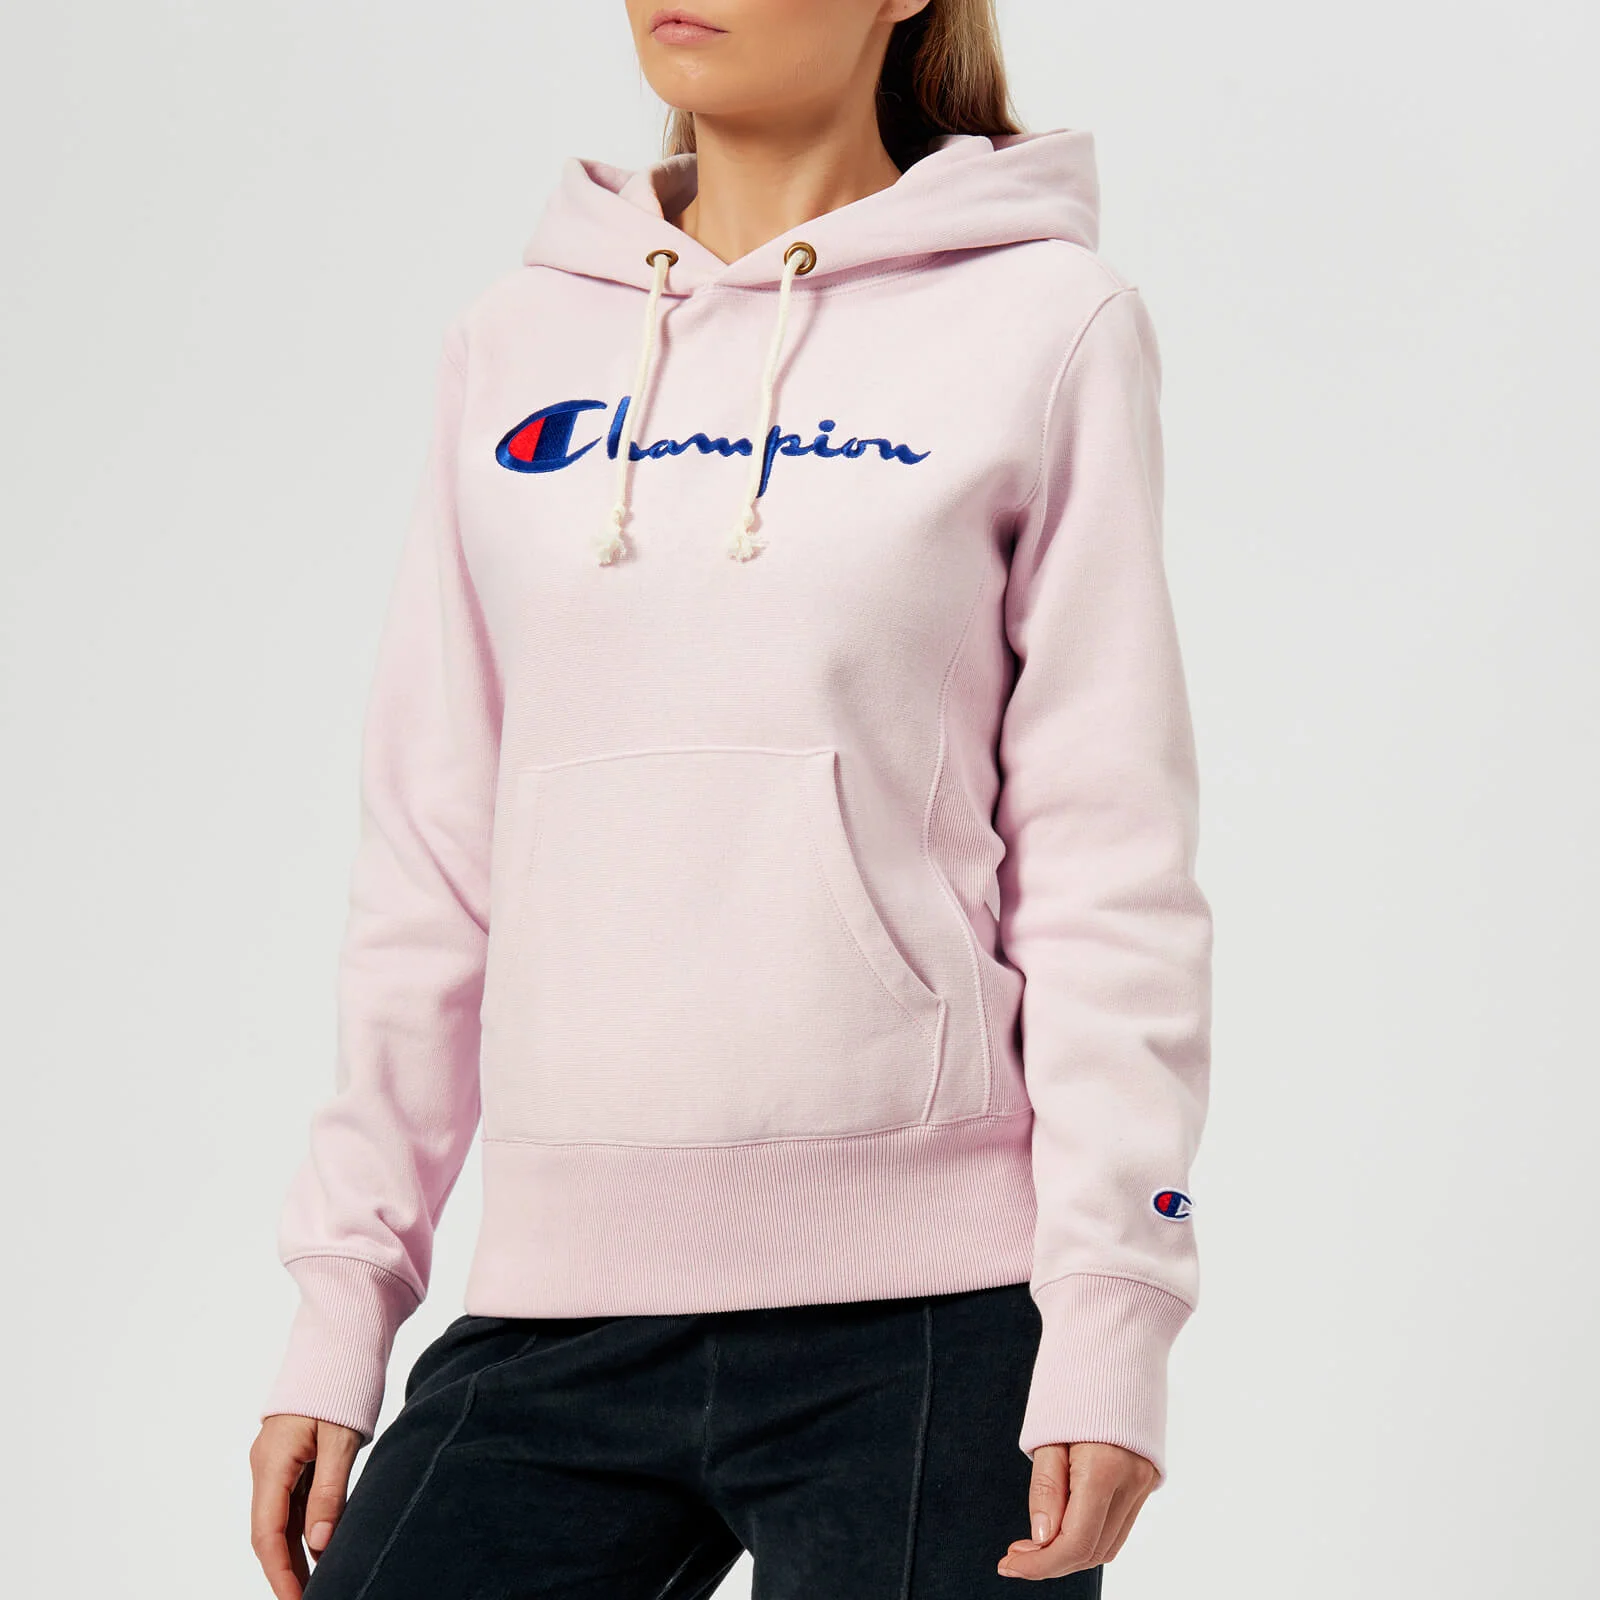 Champion Women's Hooded Sweatshirt - Lilac Image 1